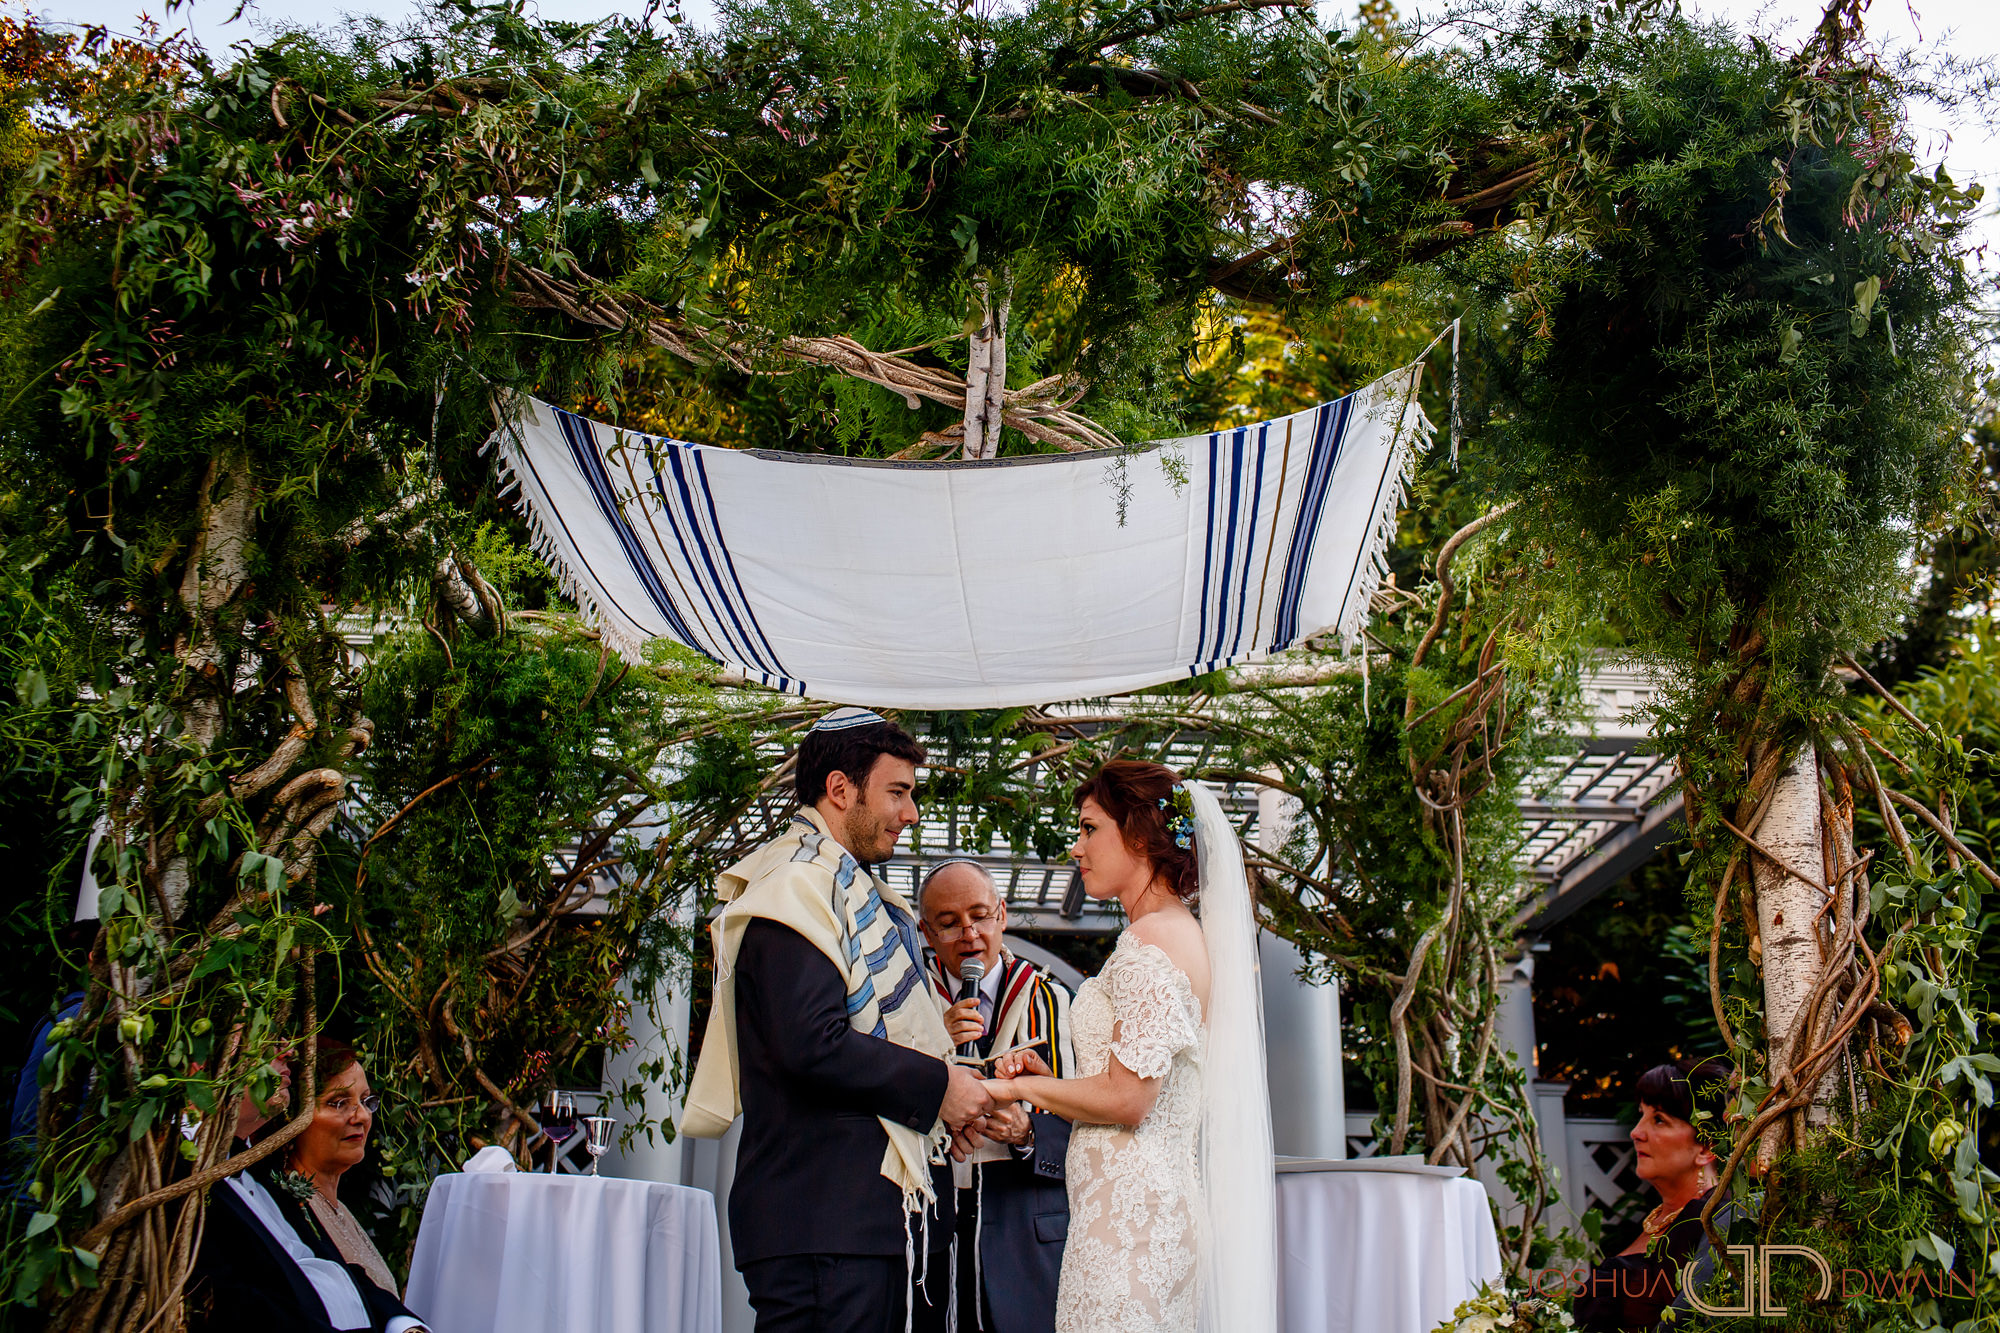 Rachel & Andres' wedding at the New York Botanical Gardens in Bronx, NY